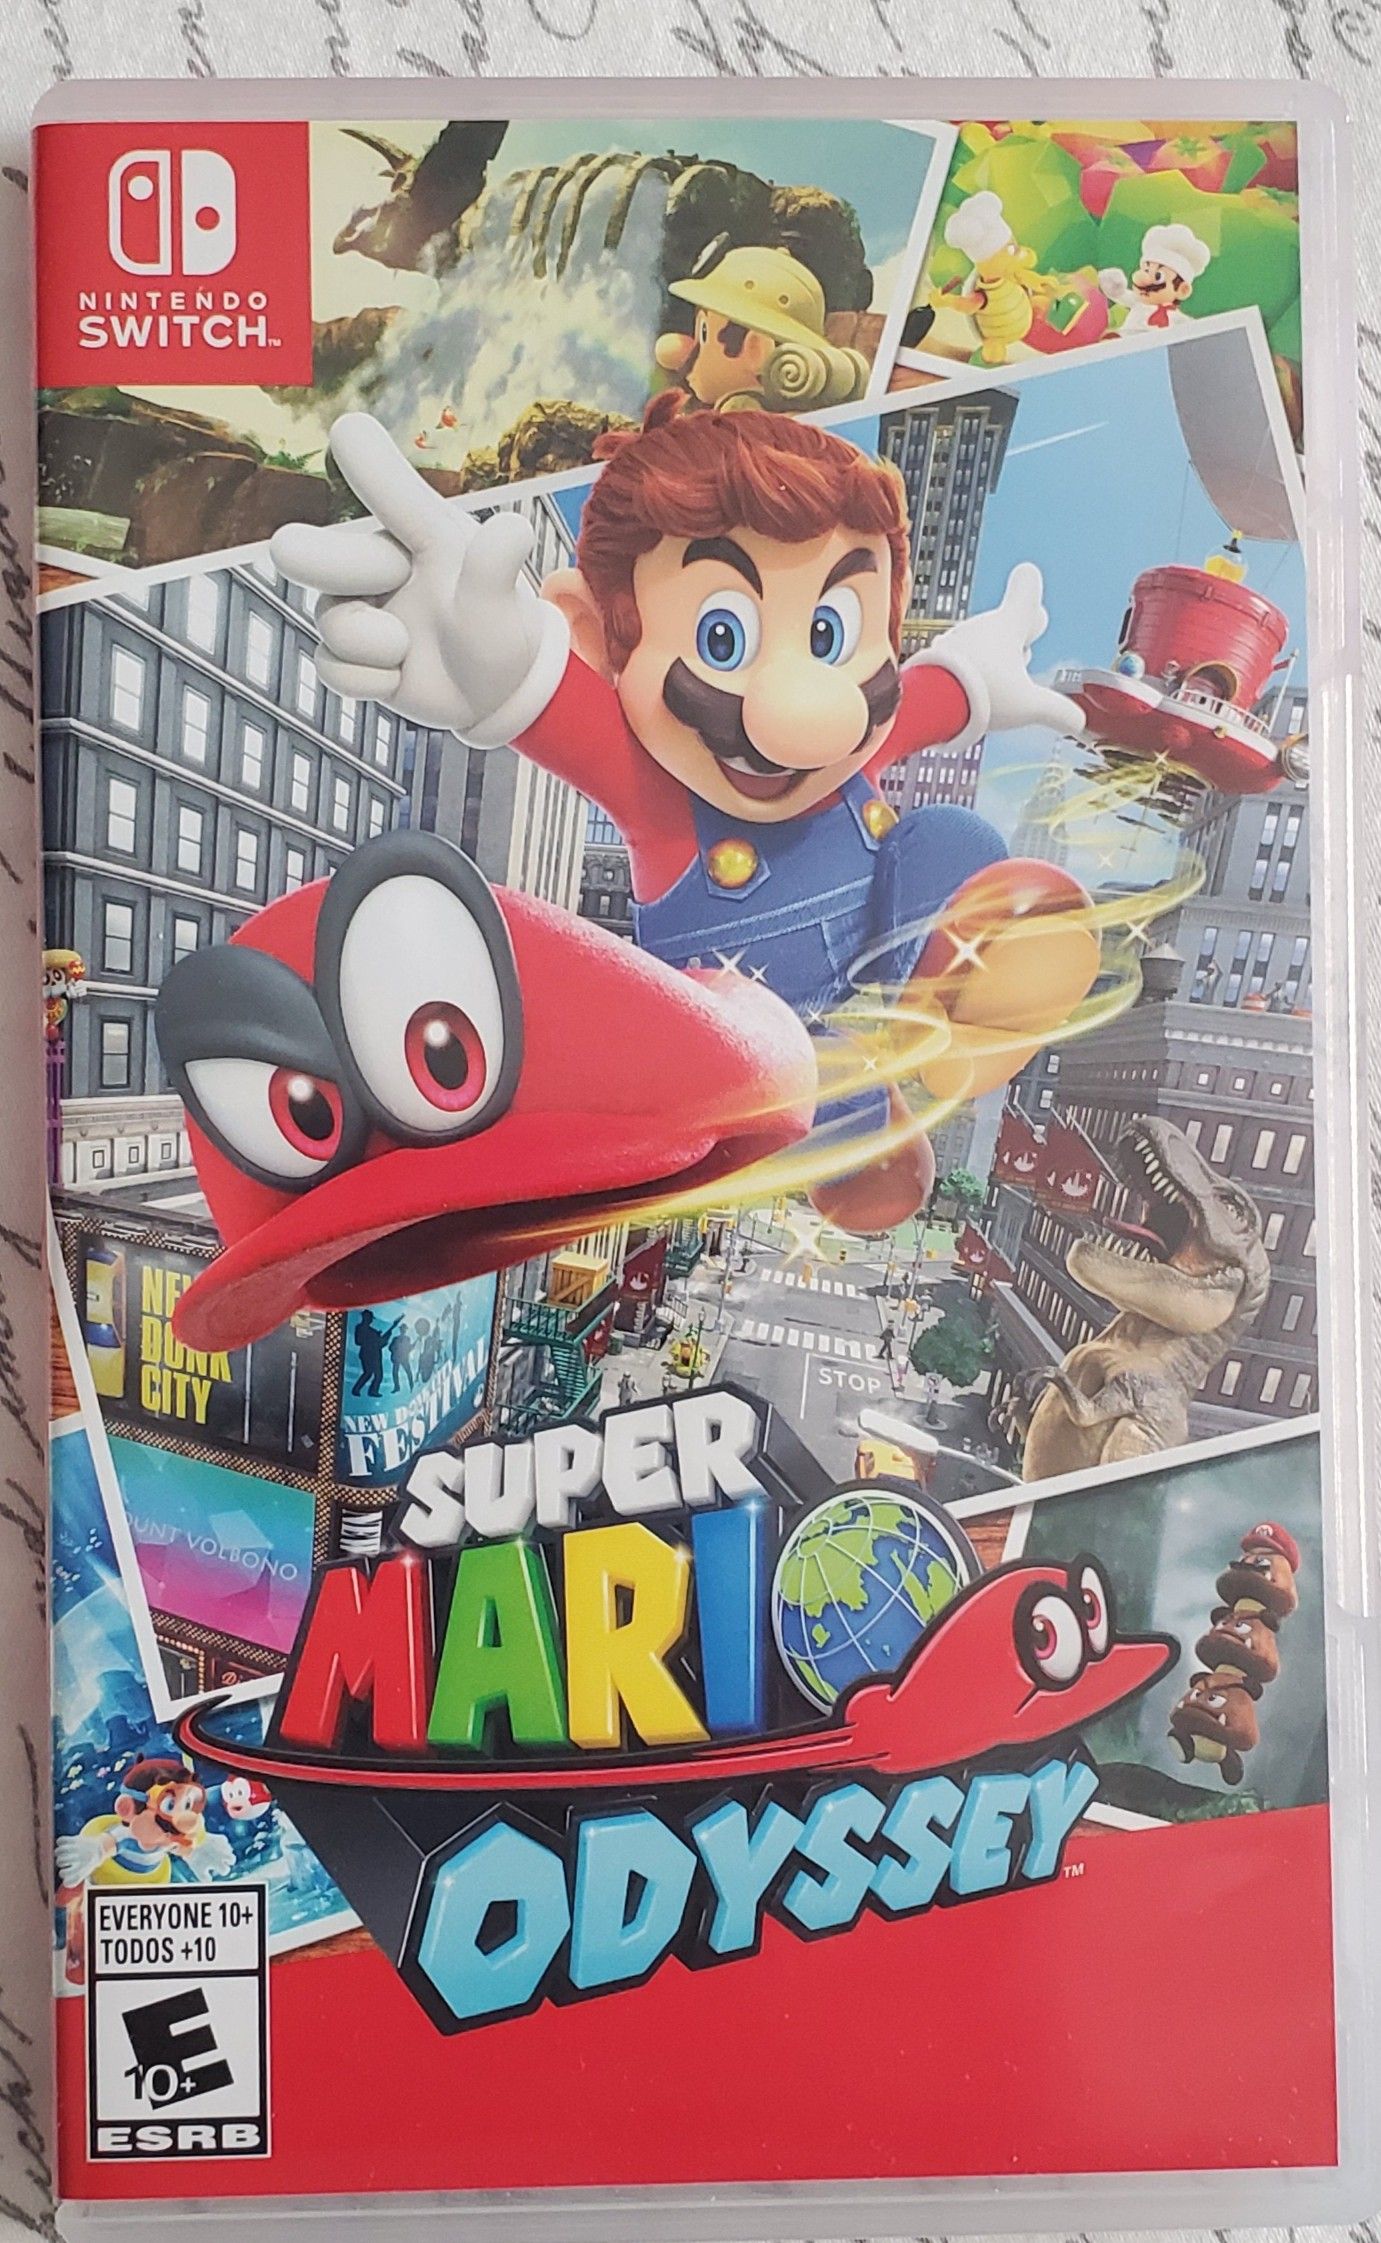 Super mario odyssey for Nintendo switch